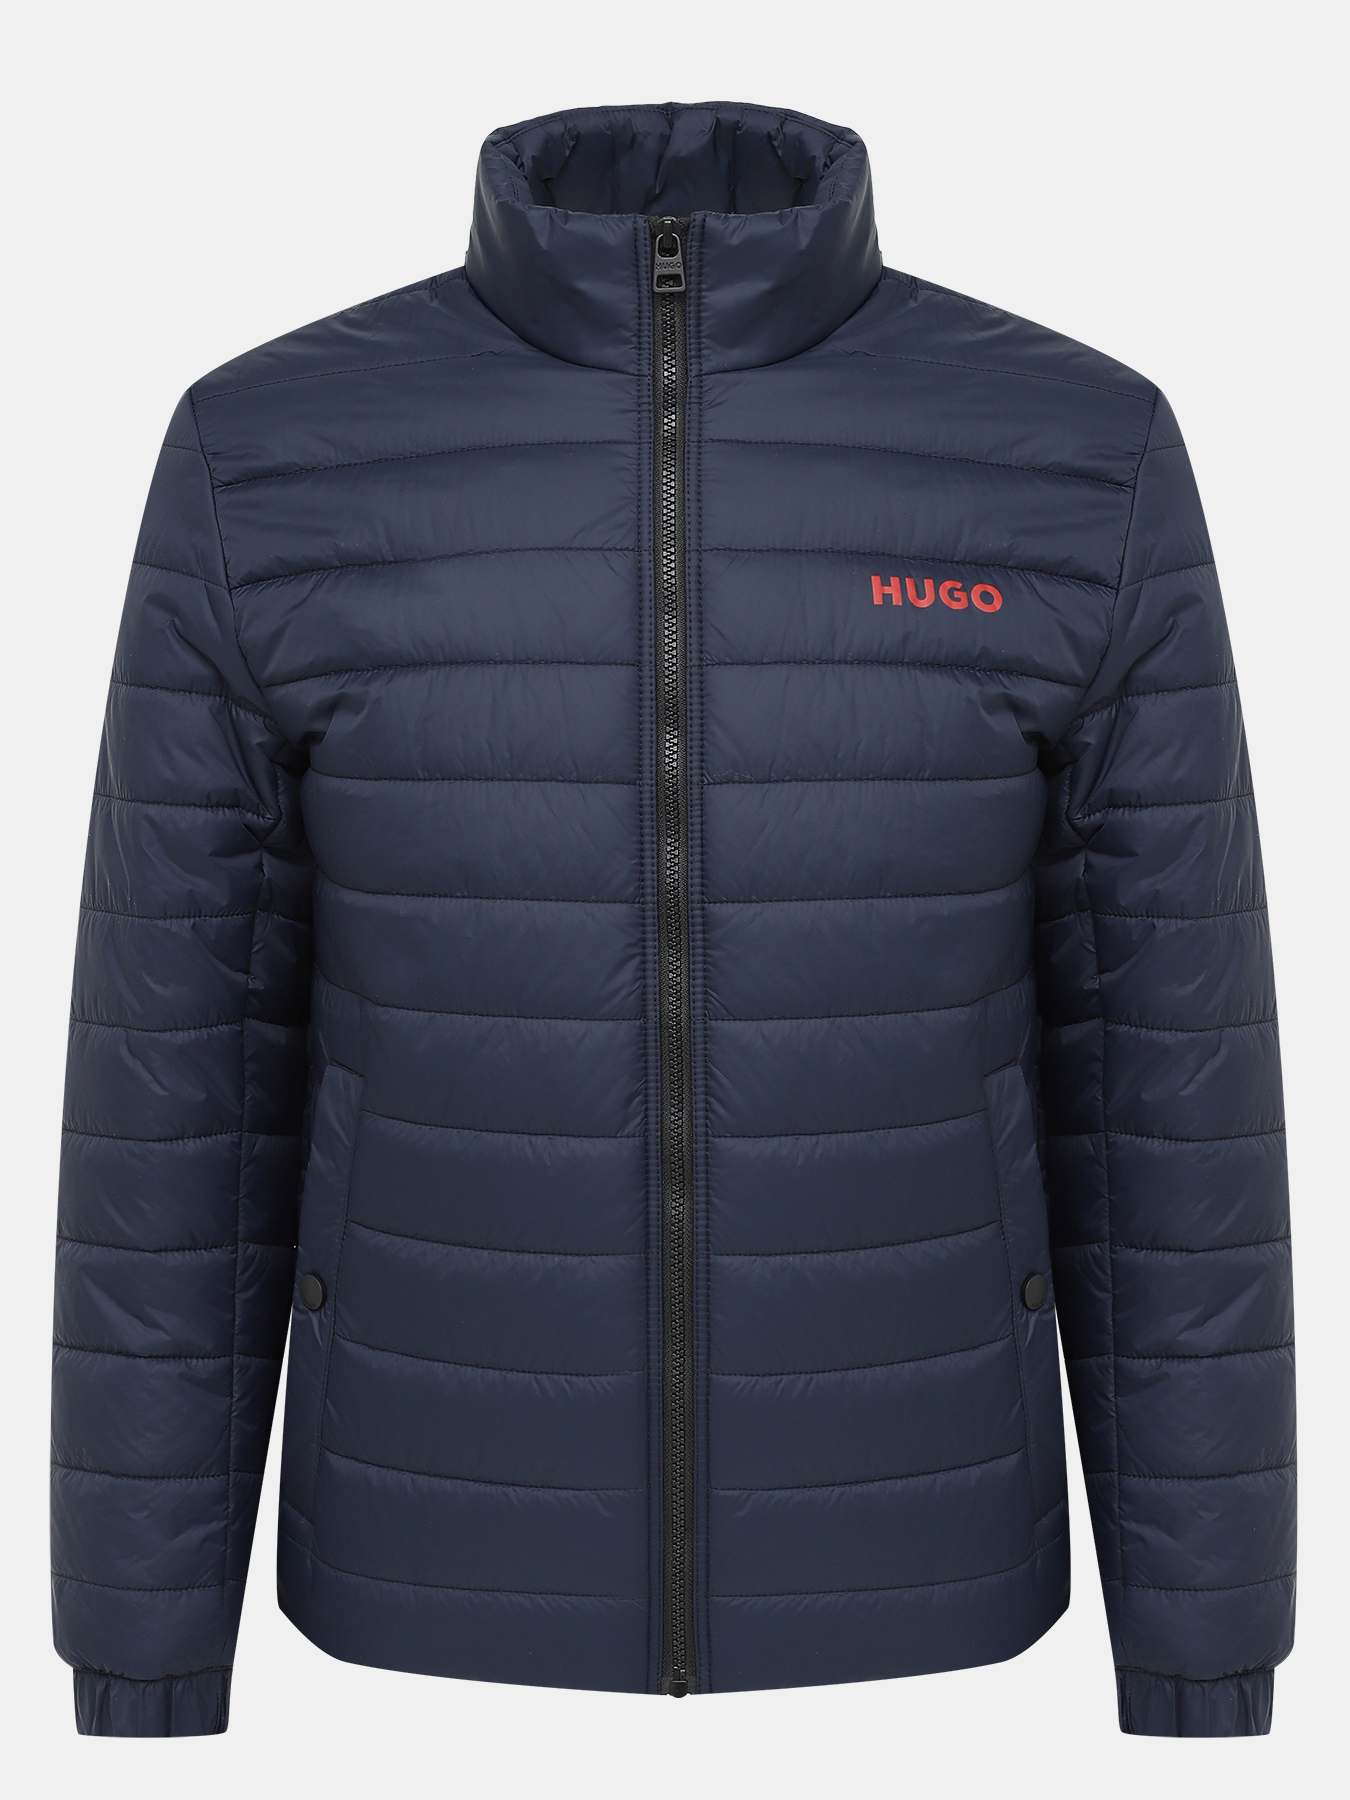 Куртка Benti HUGO 437018-045, цвет темно-синий, размер 52-54 - фото 1